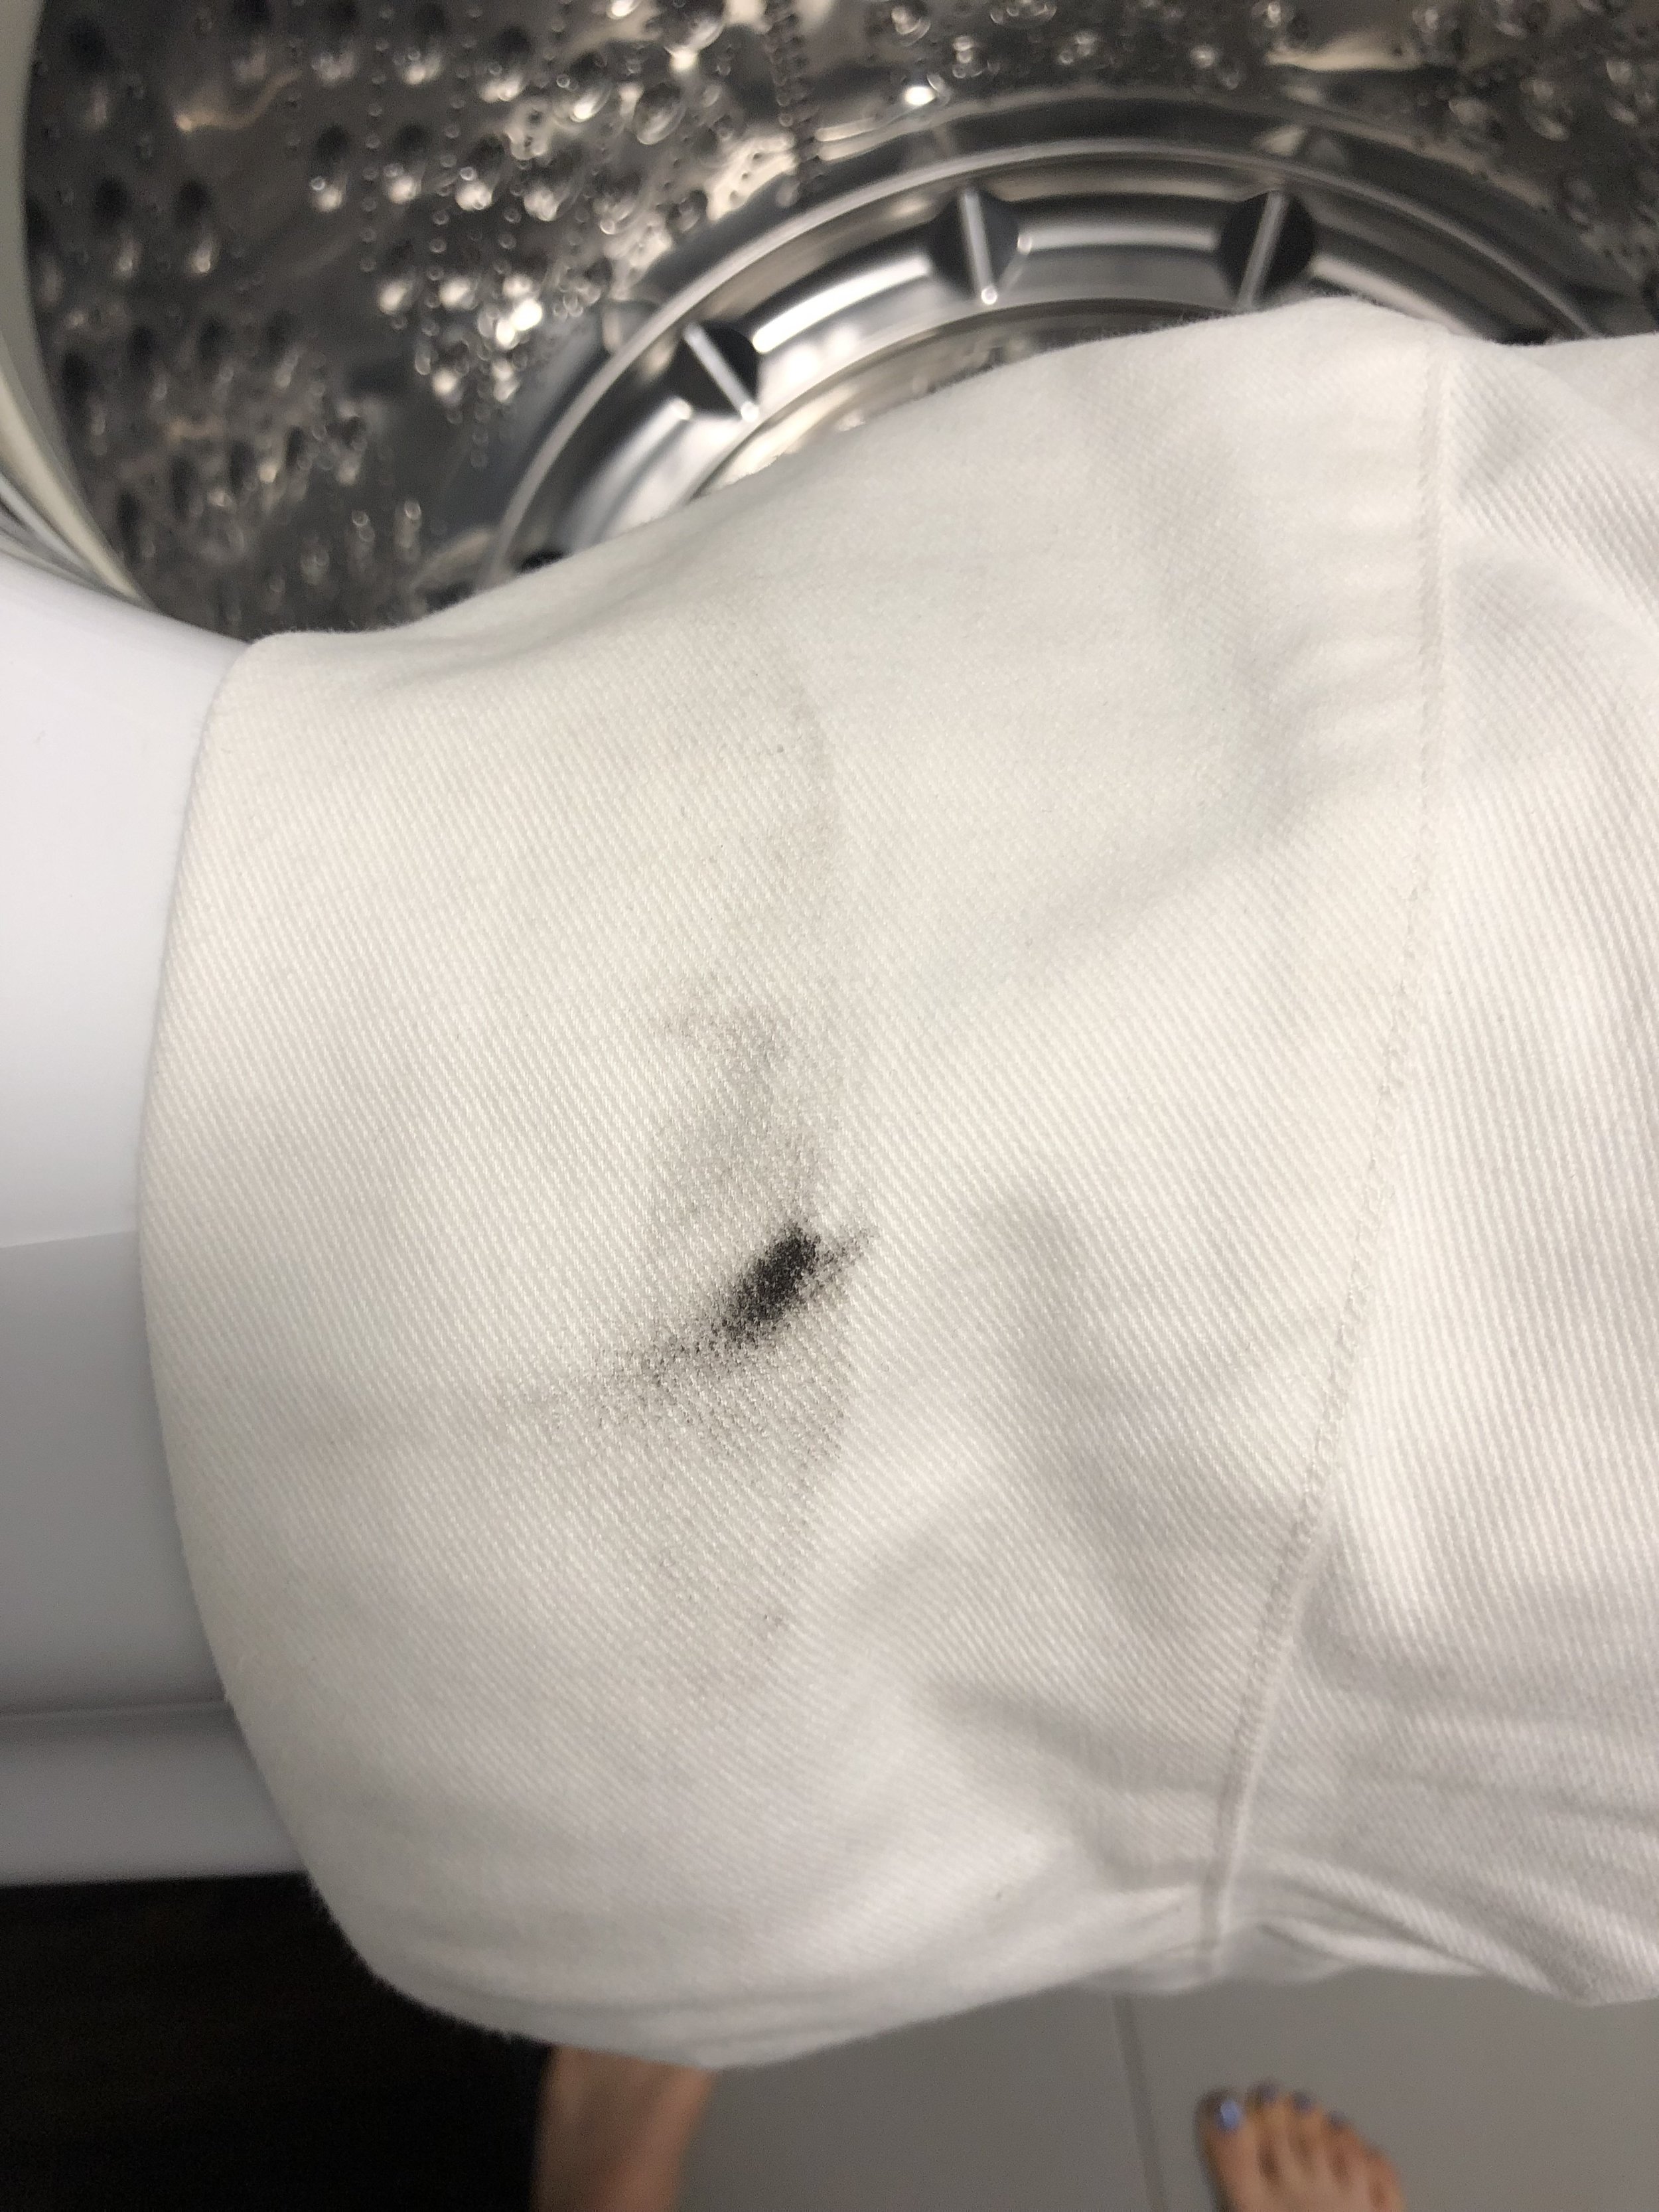 BB laundry stain before.jpg